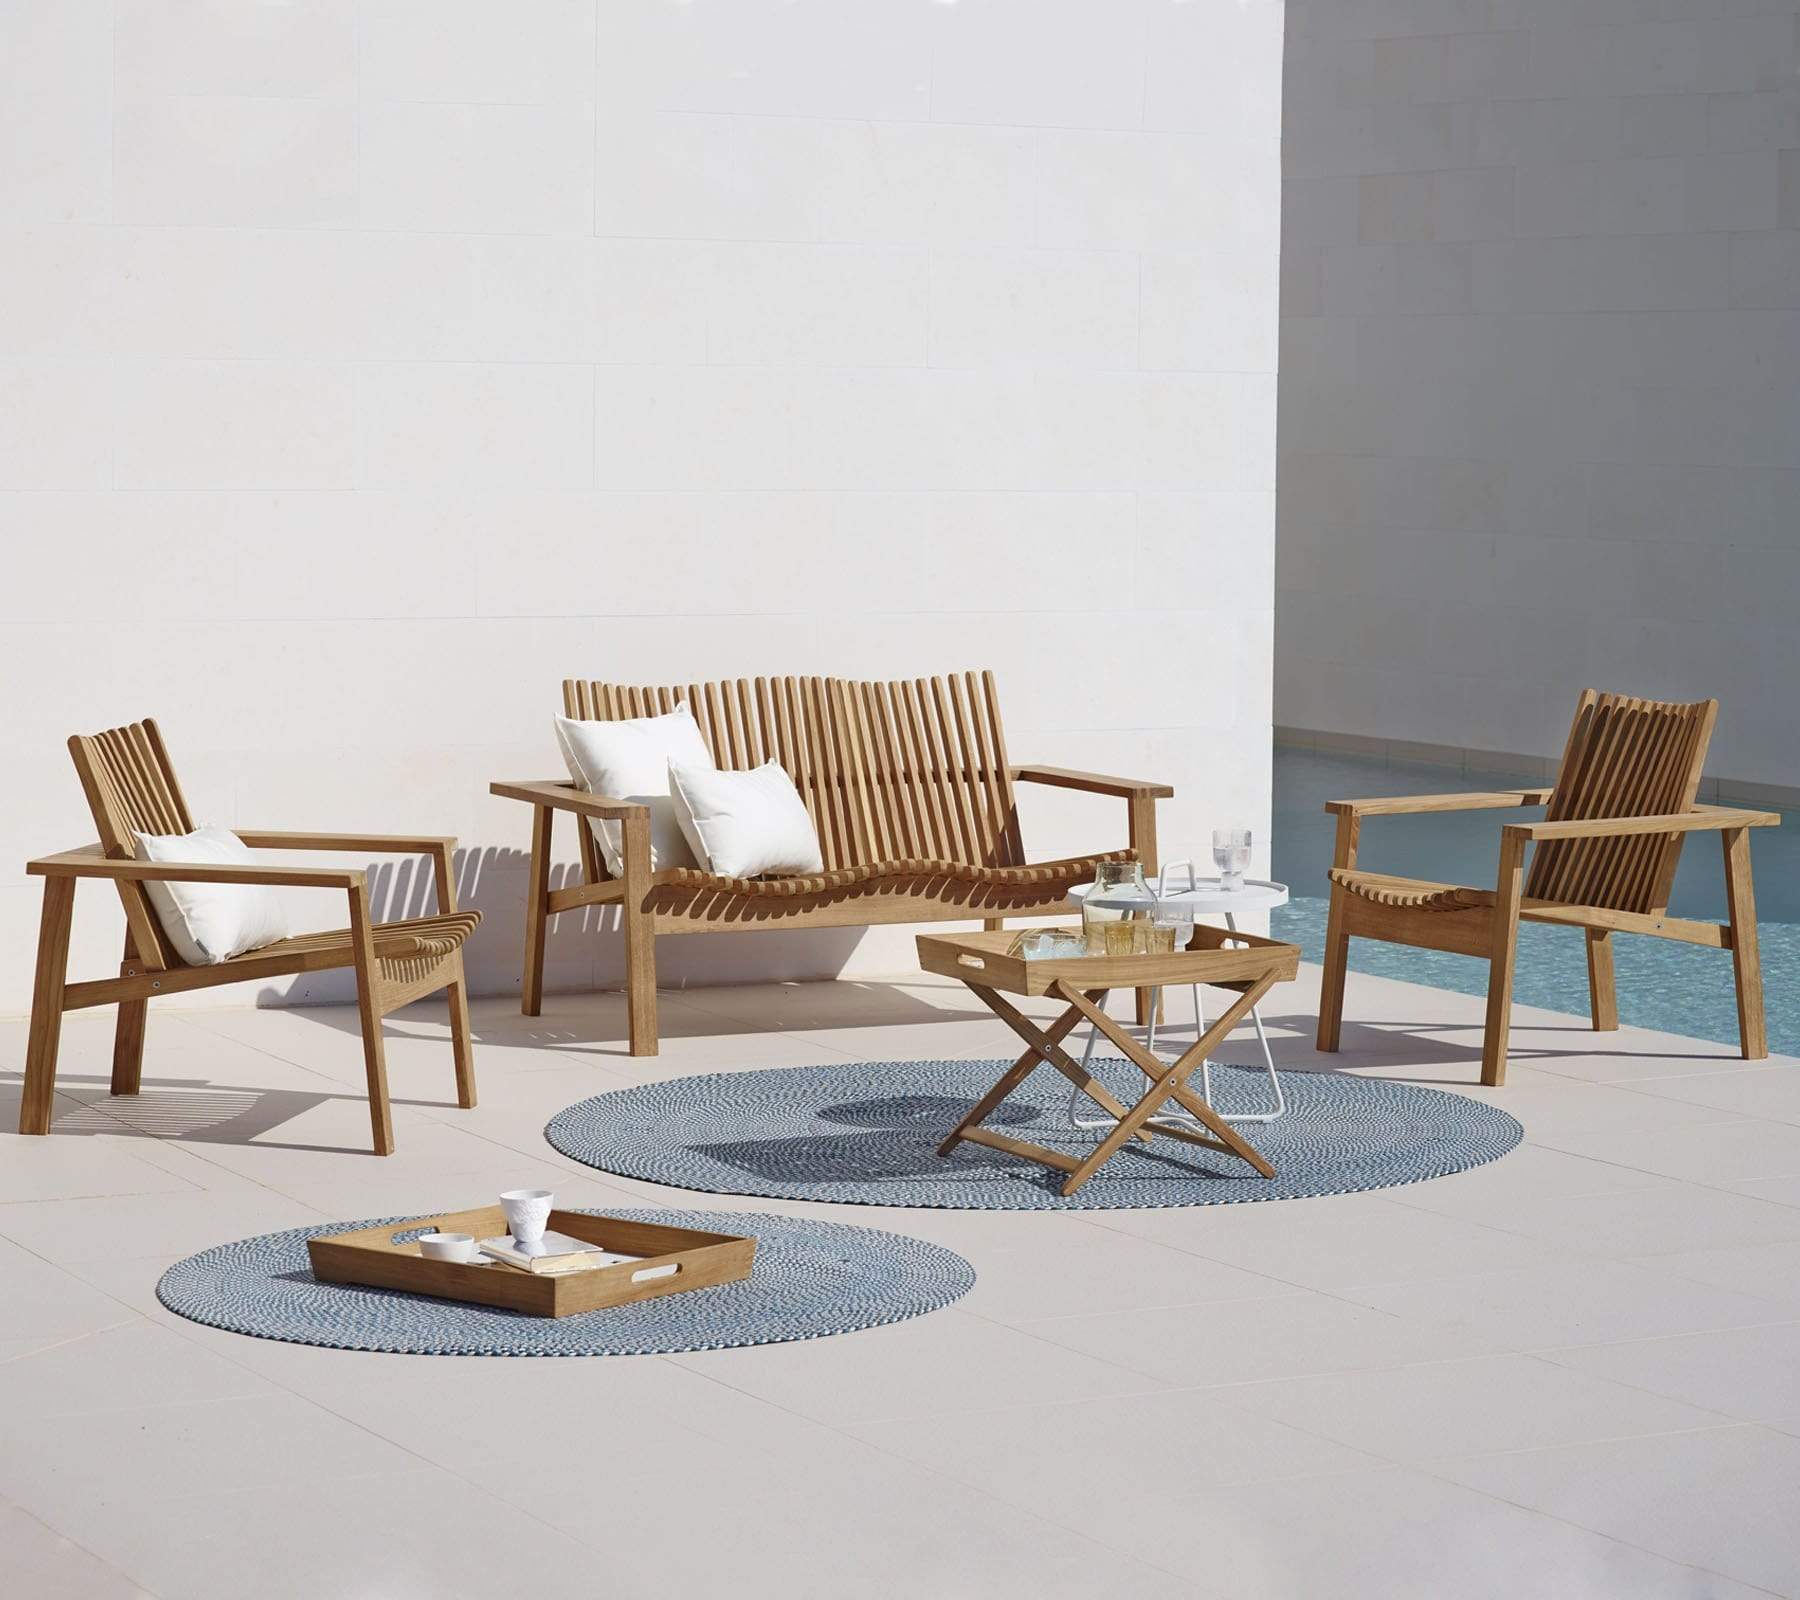 Boxhill's Amaze 2-Seater Teak Sofa lifestyle image with amaze lounge chair beside the pool